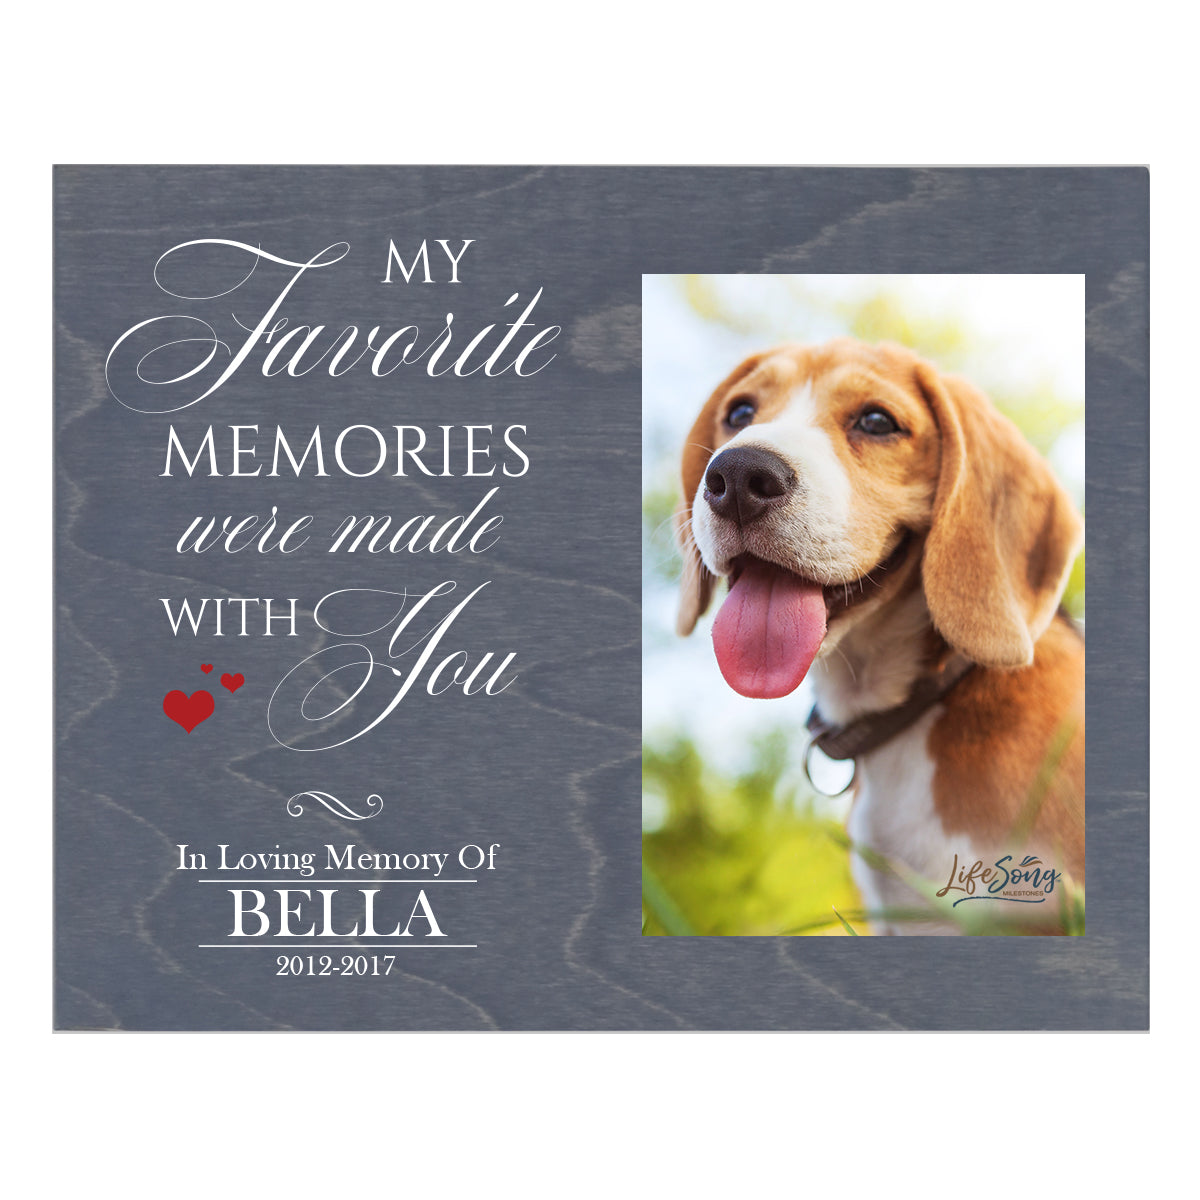 Pet Memorial Photo Wall Plaque Décor - My Favorite Memories